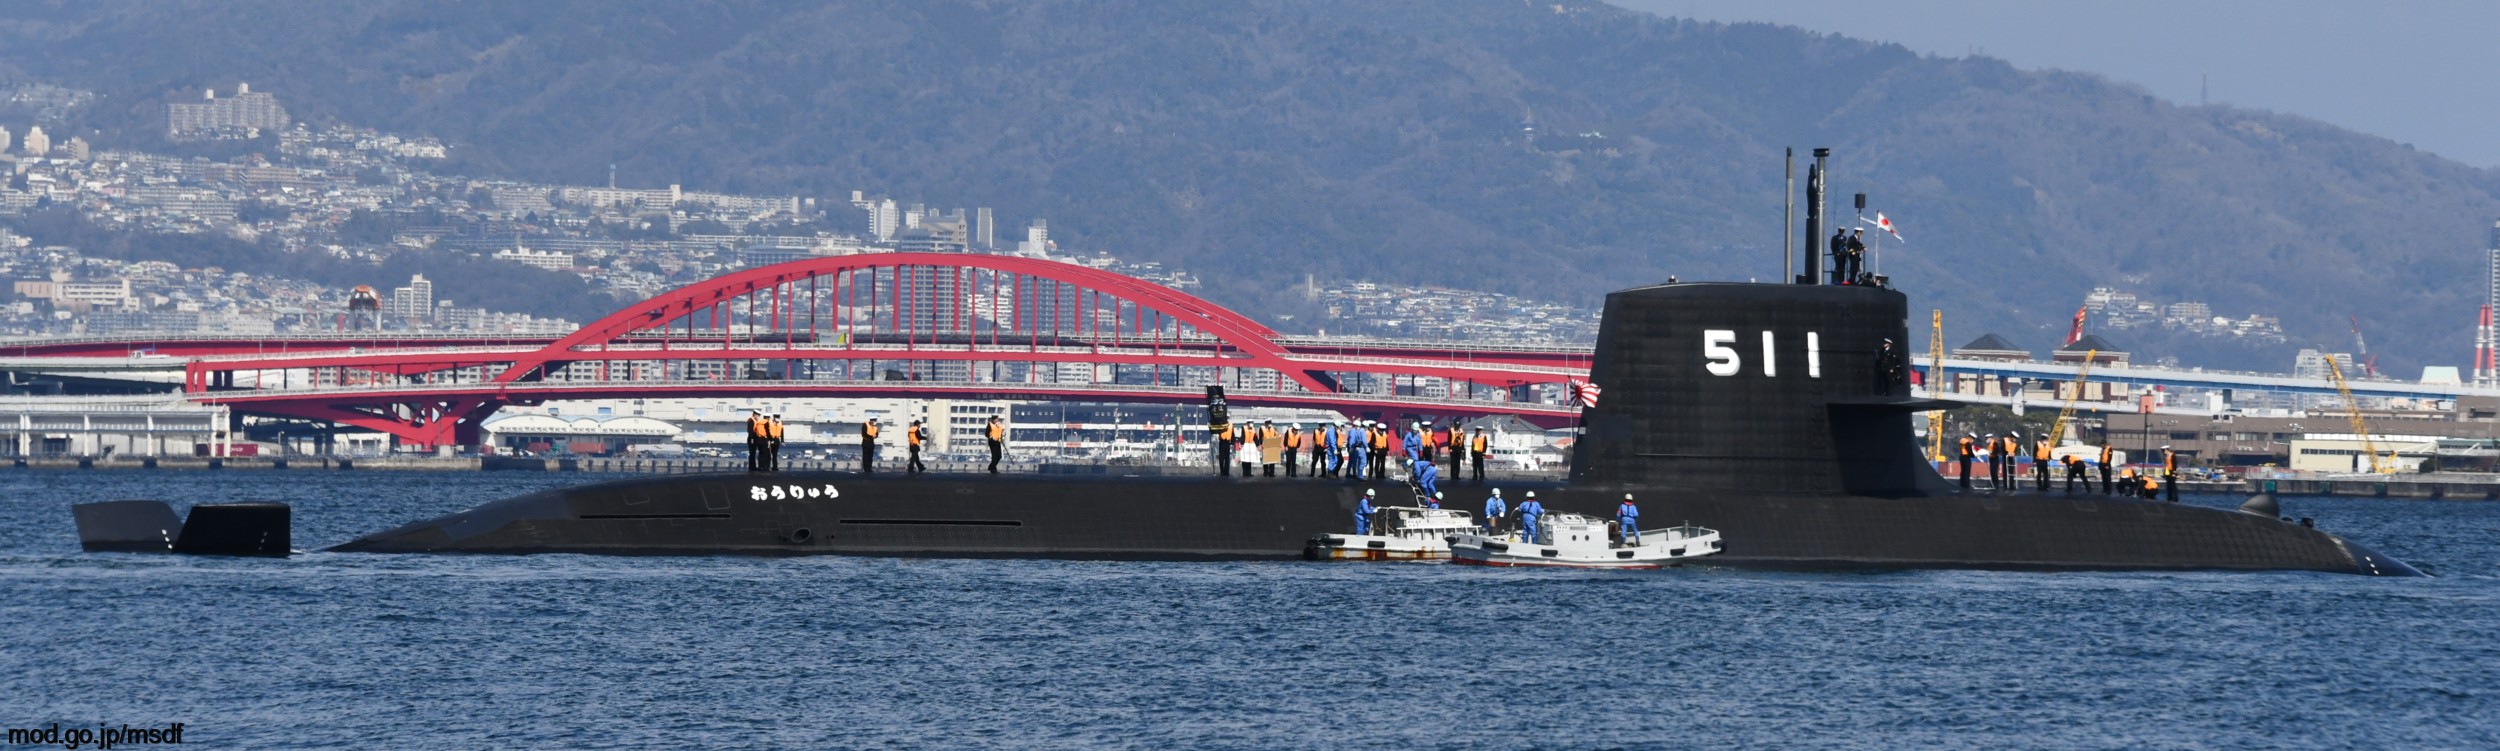 ss-511 js oryu 16ss soryu class attack submarine ssk japan maritime self defense force jmsdf 02